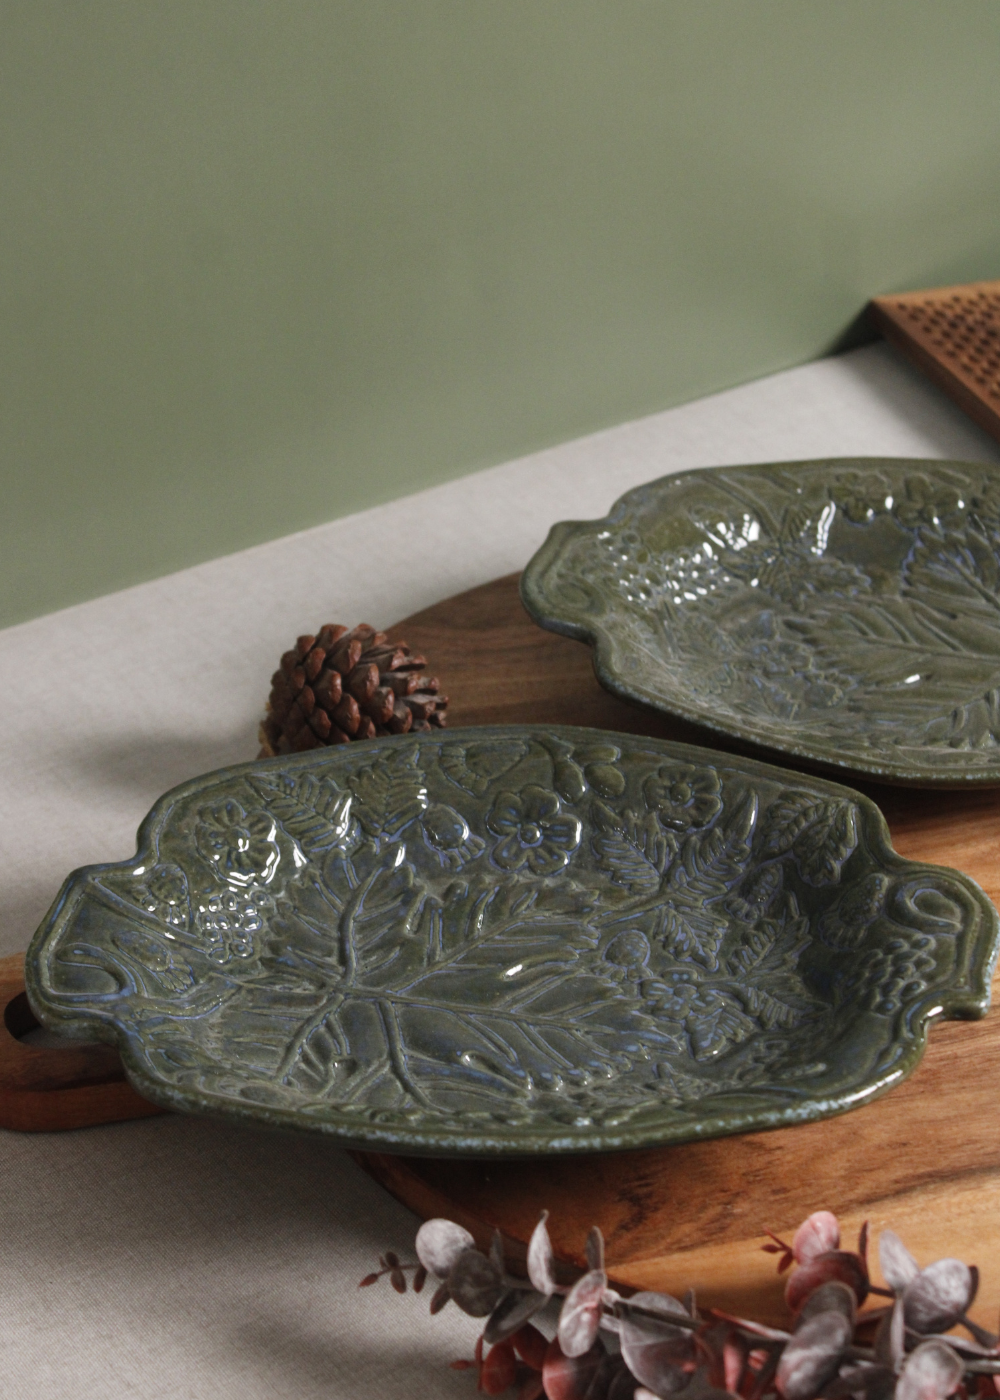 Ceramic green platter on wooden surface